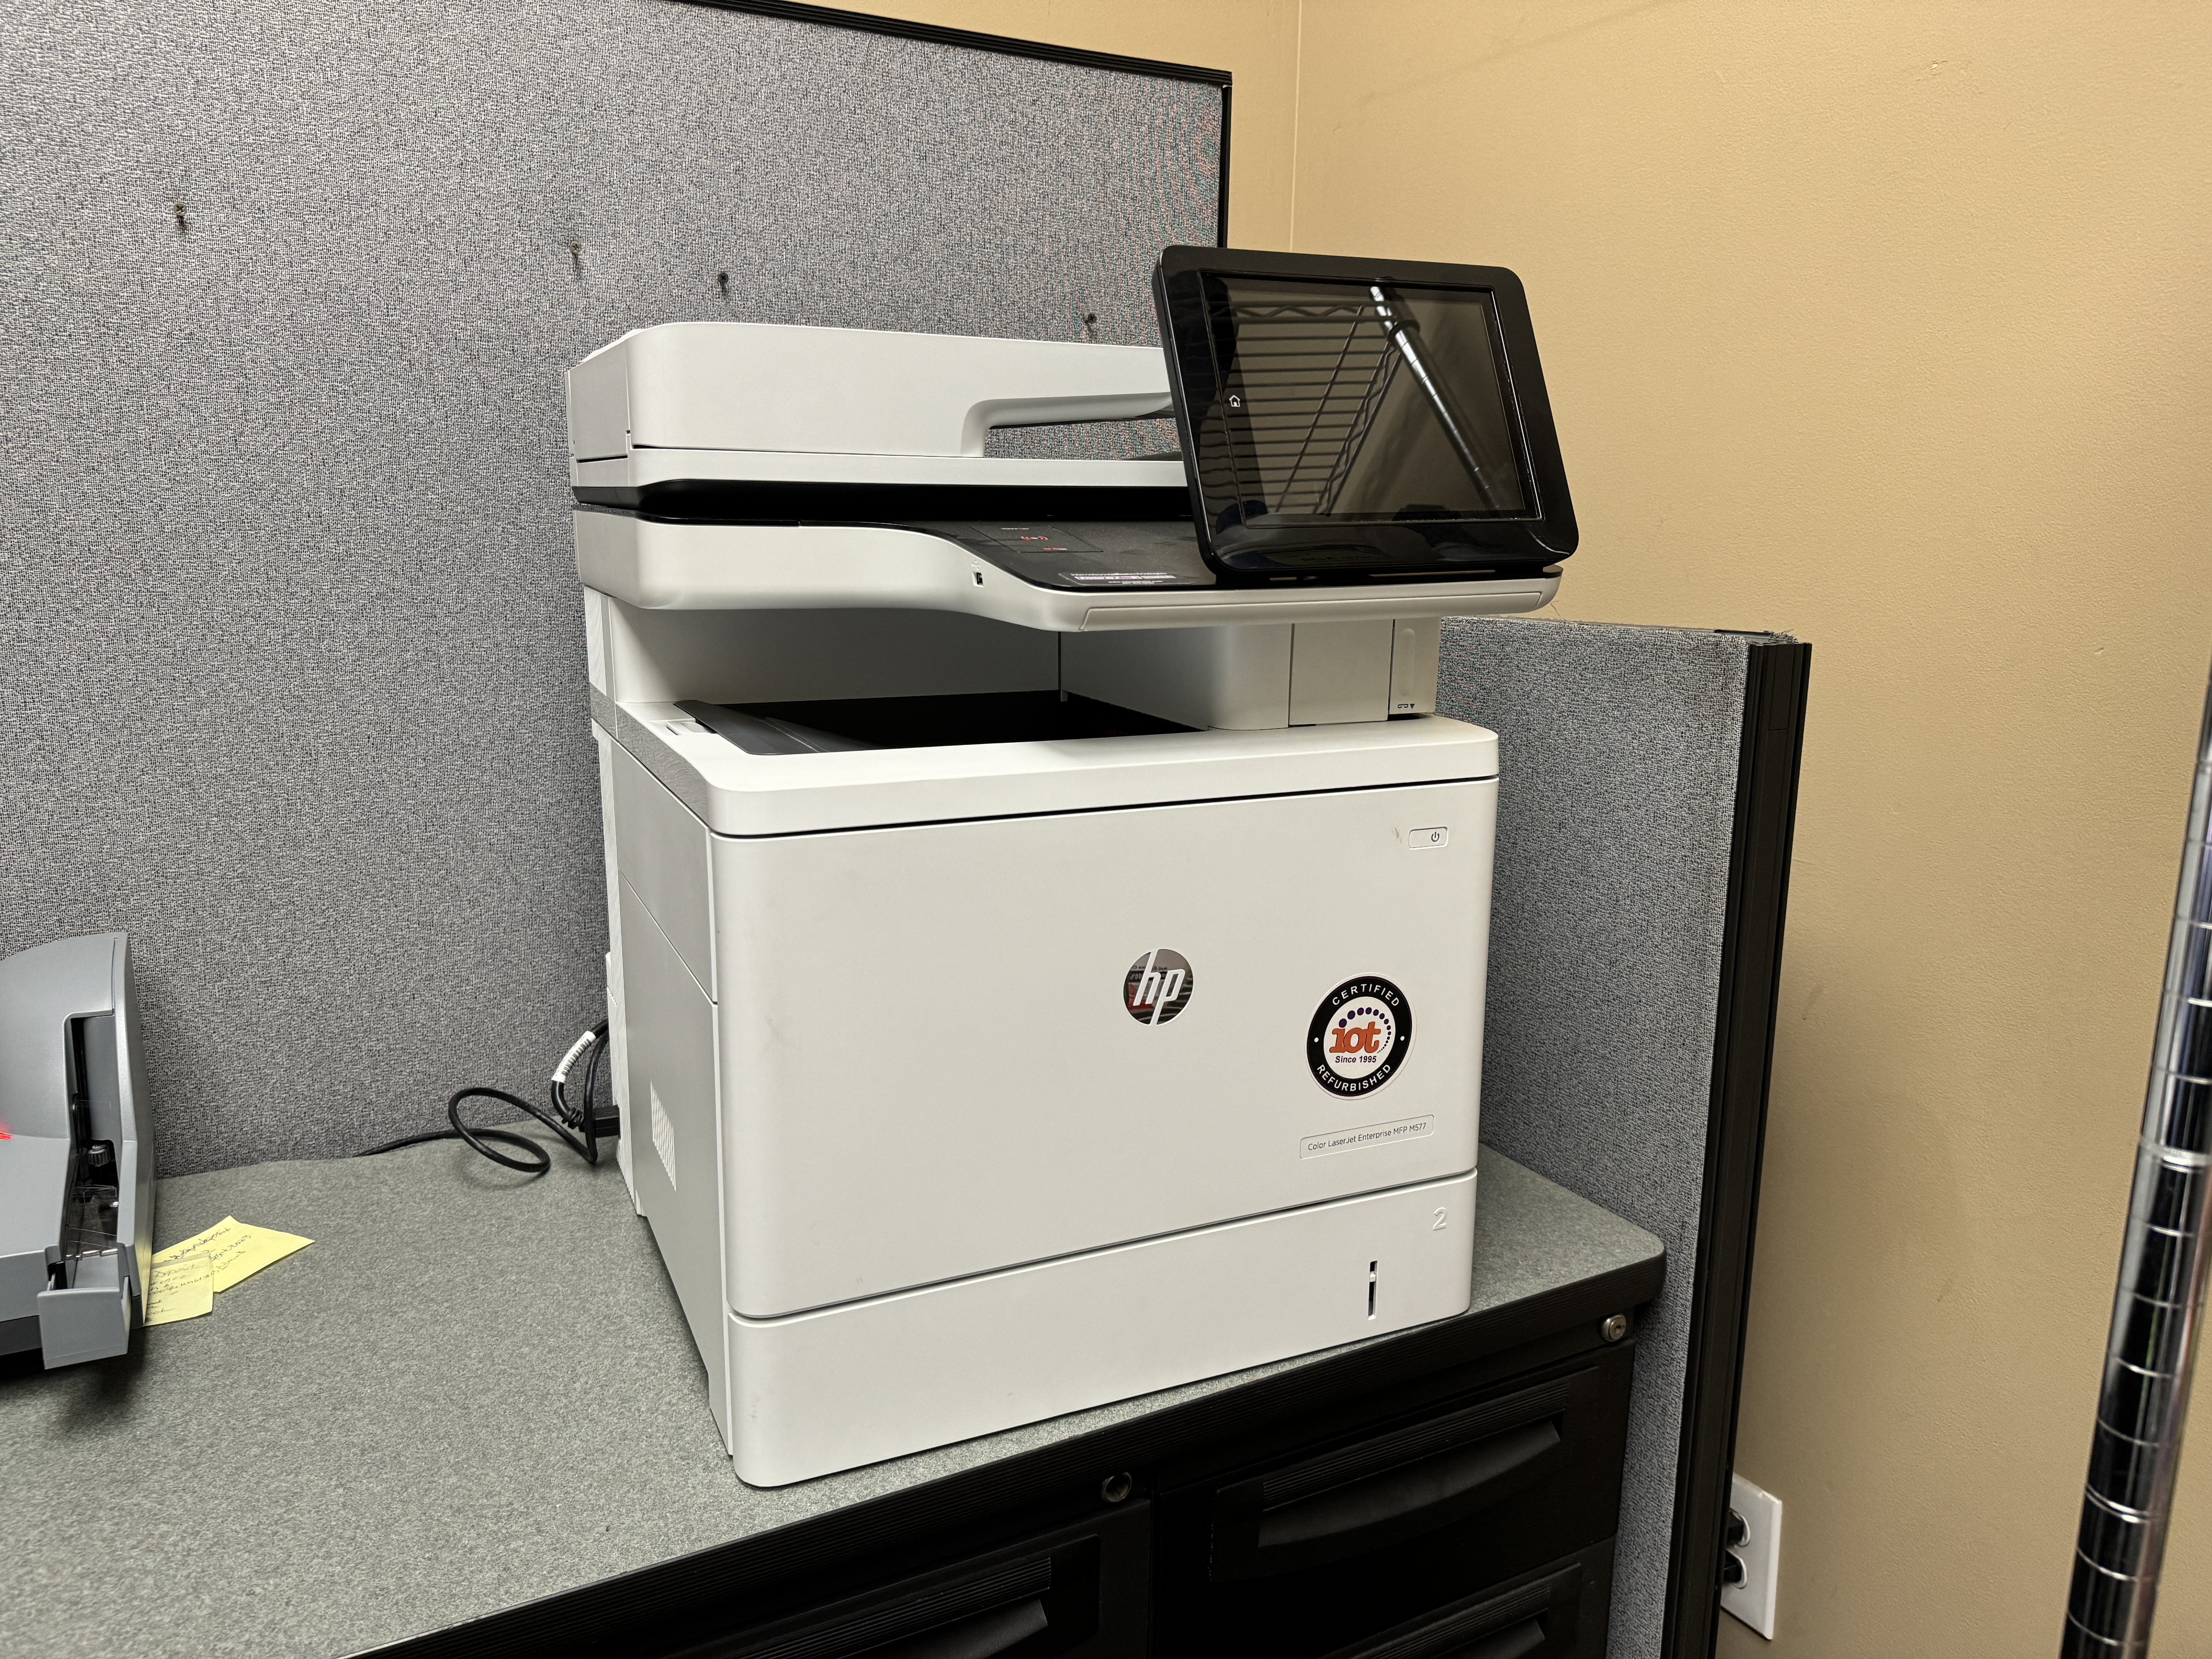 HP M577 desktop color copier. 